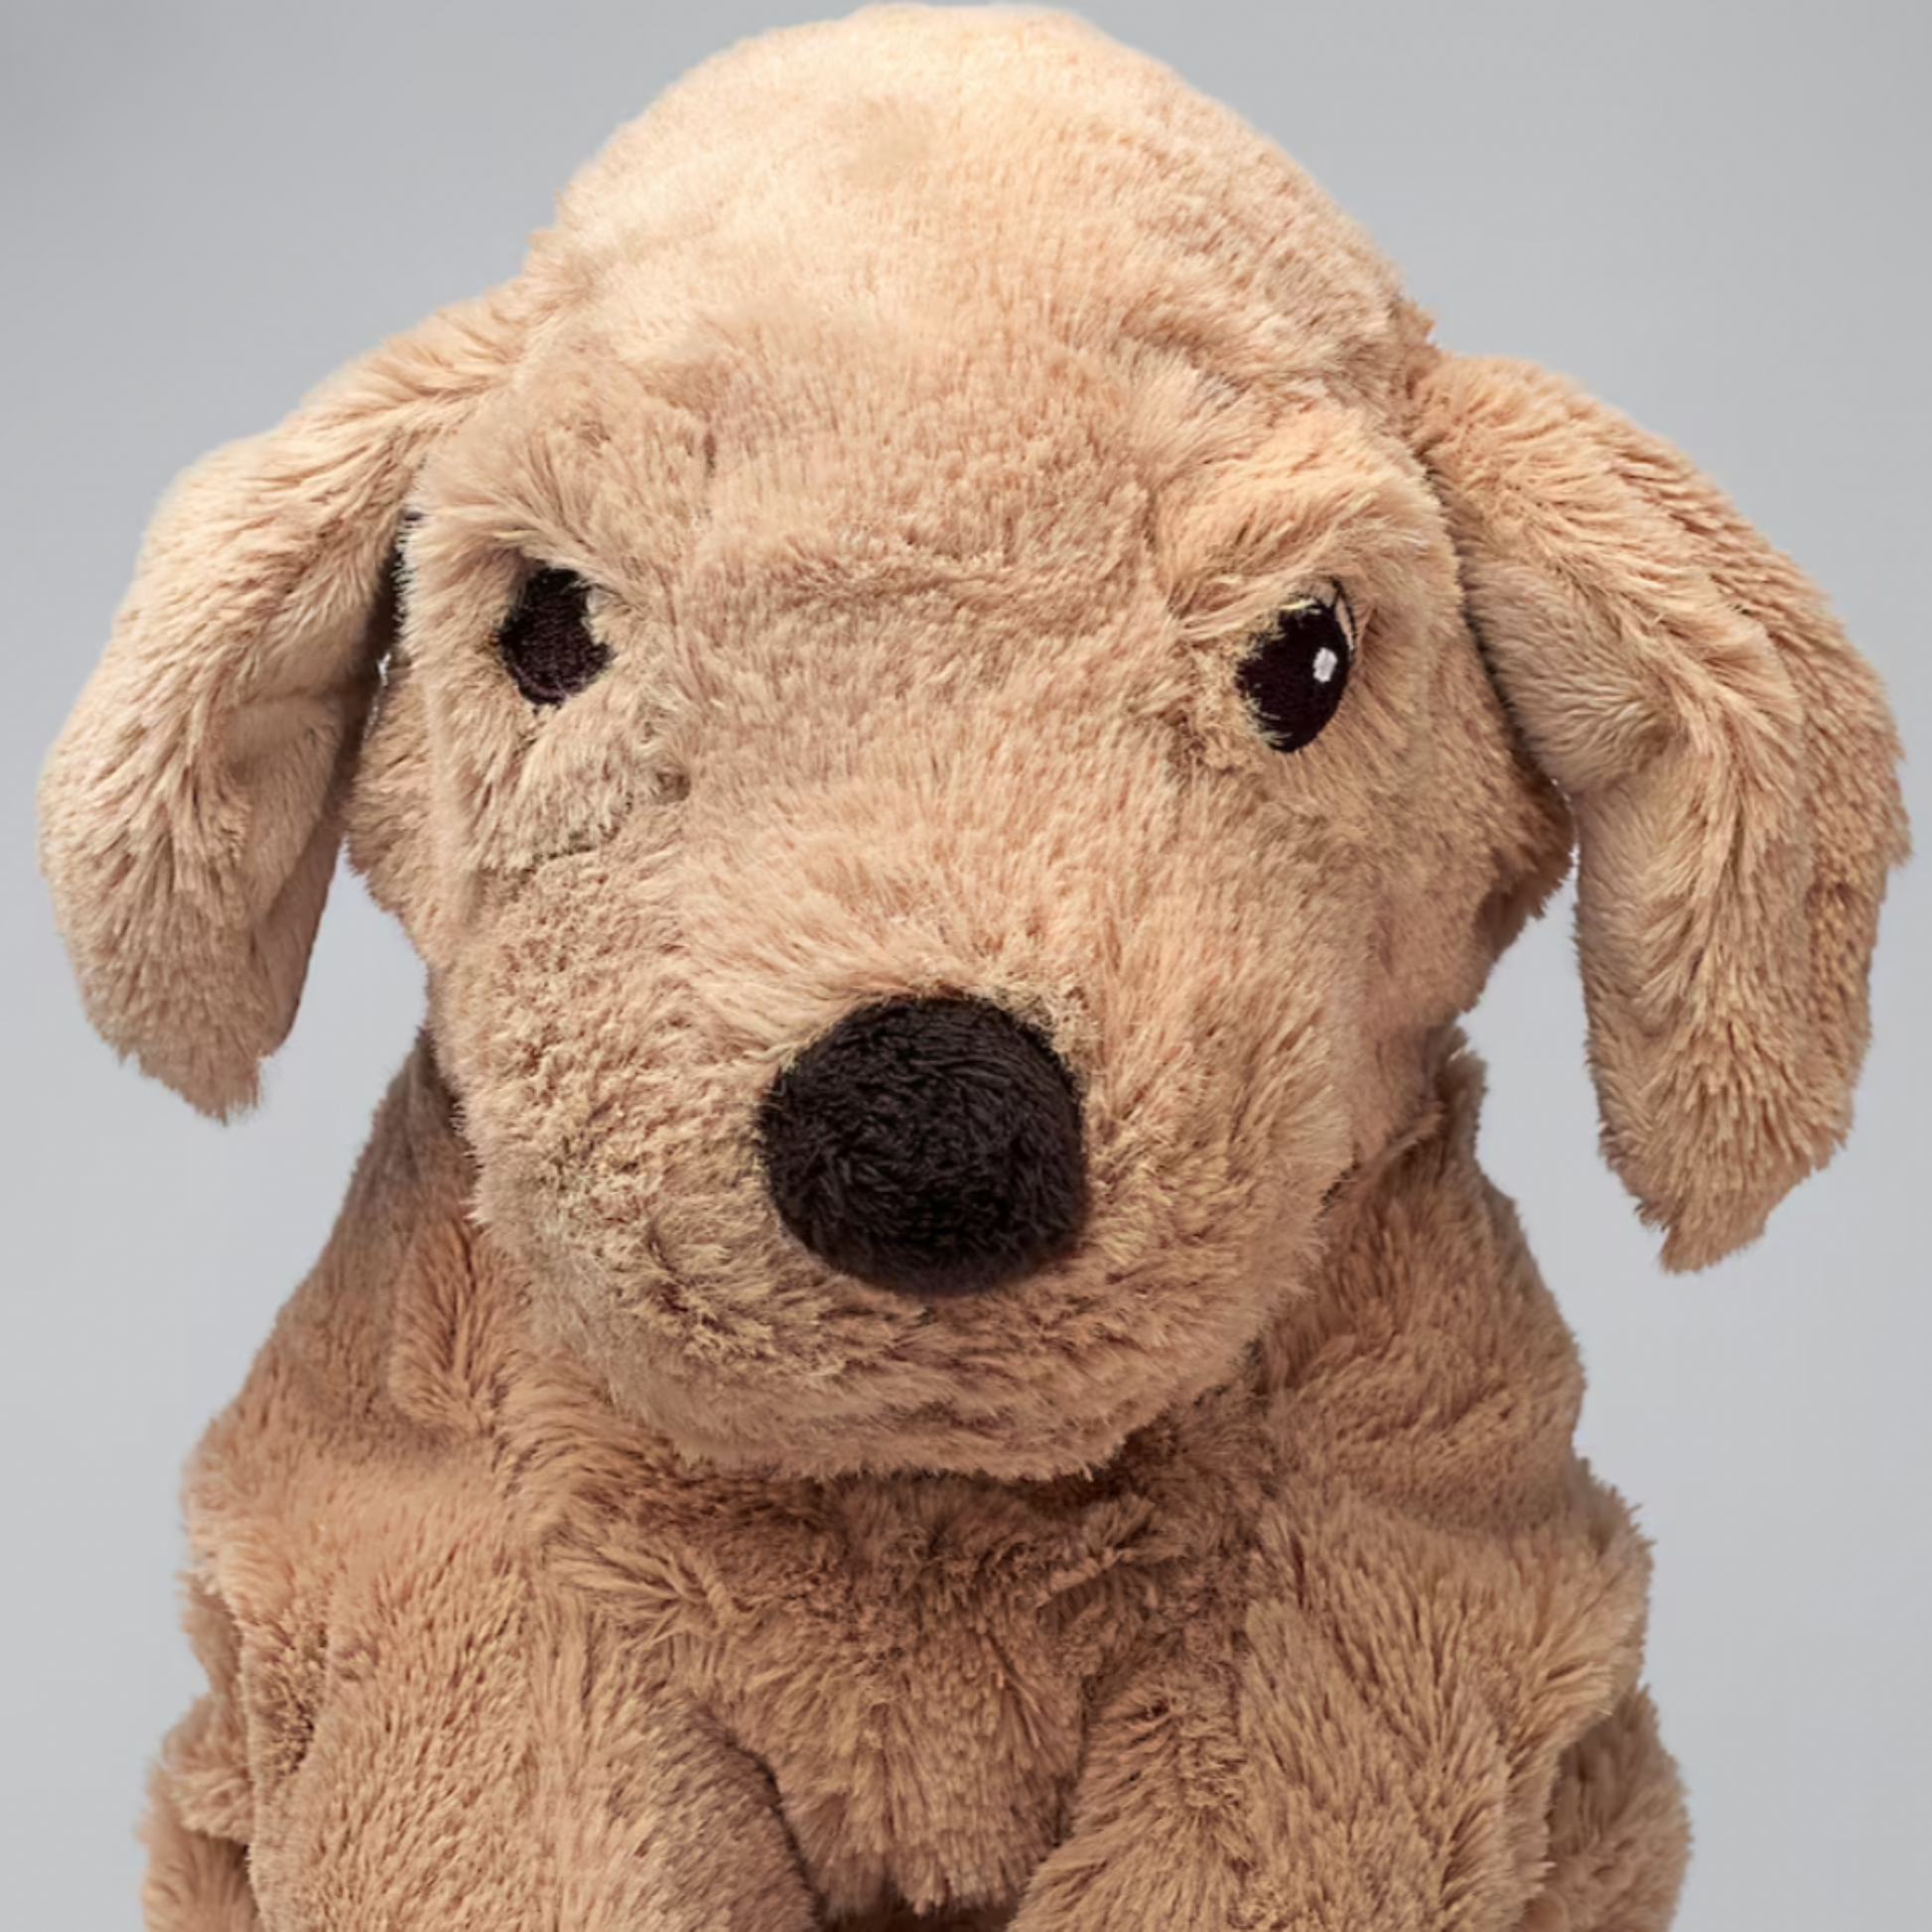 Ikea Gosig Golden Retriever Dog Soft Toy, Puppy/40cm (8548839915807)